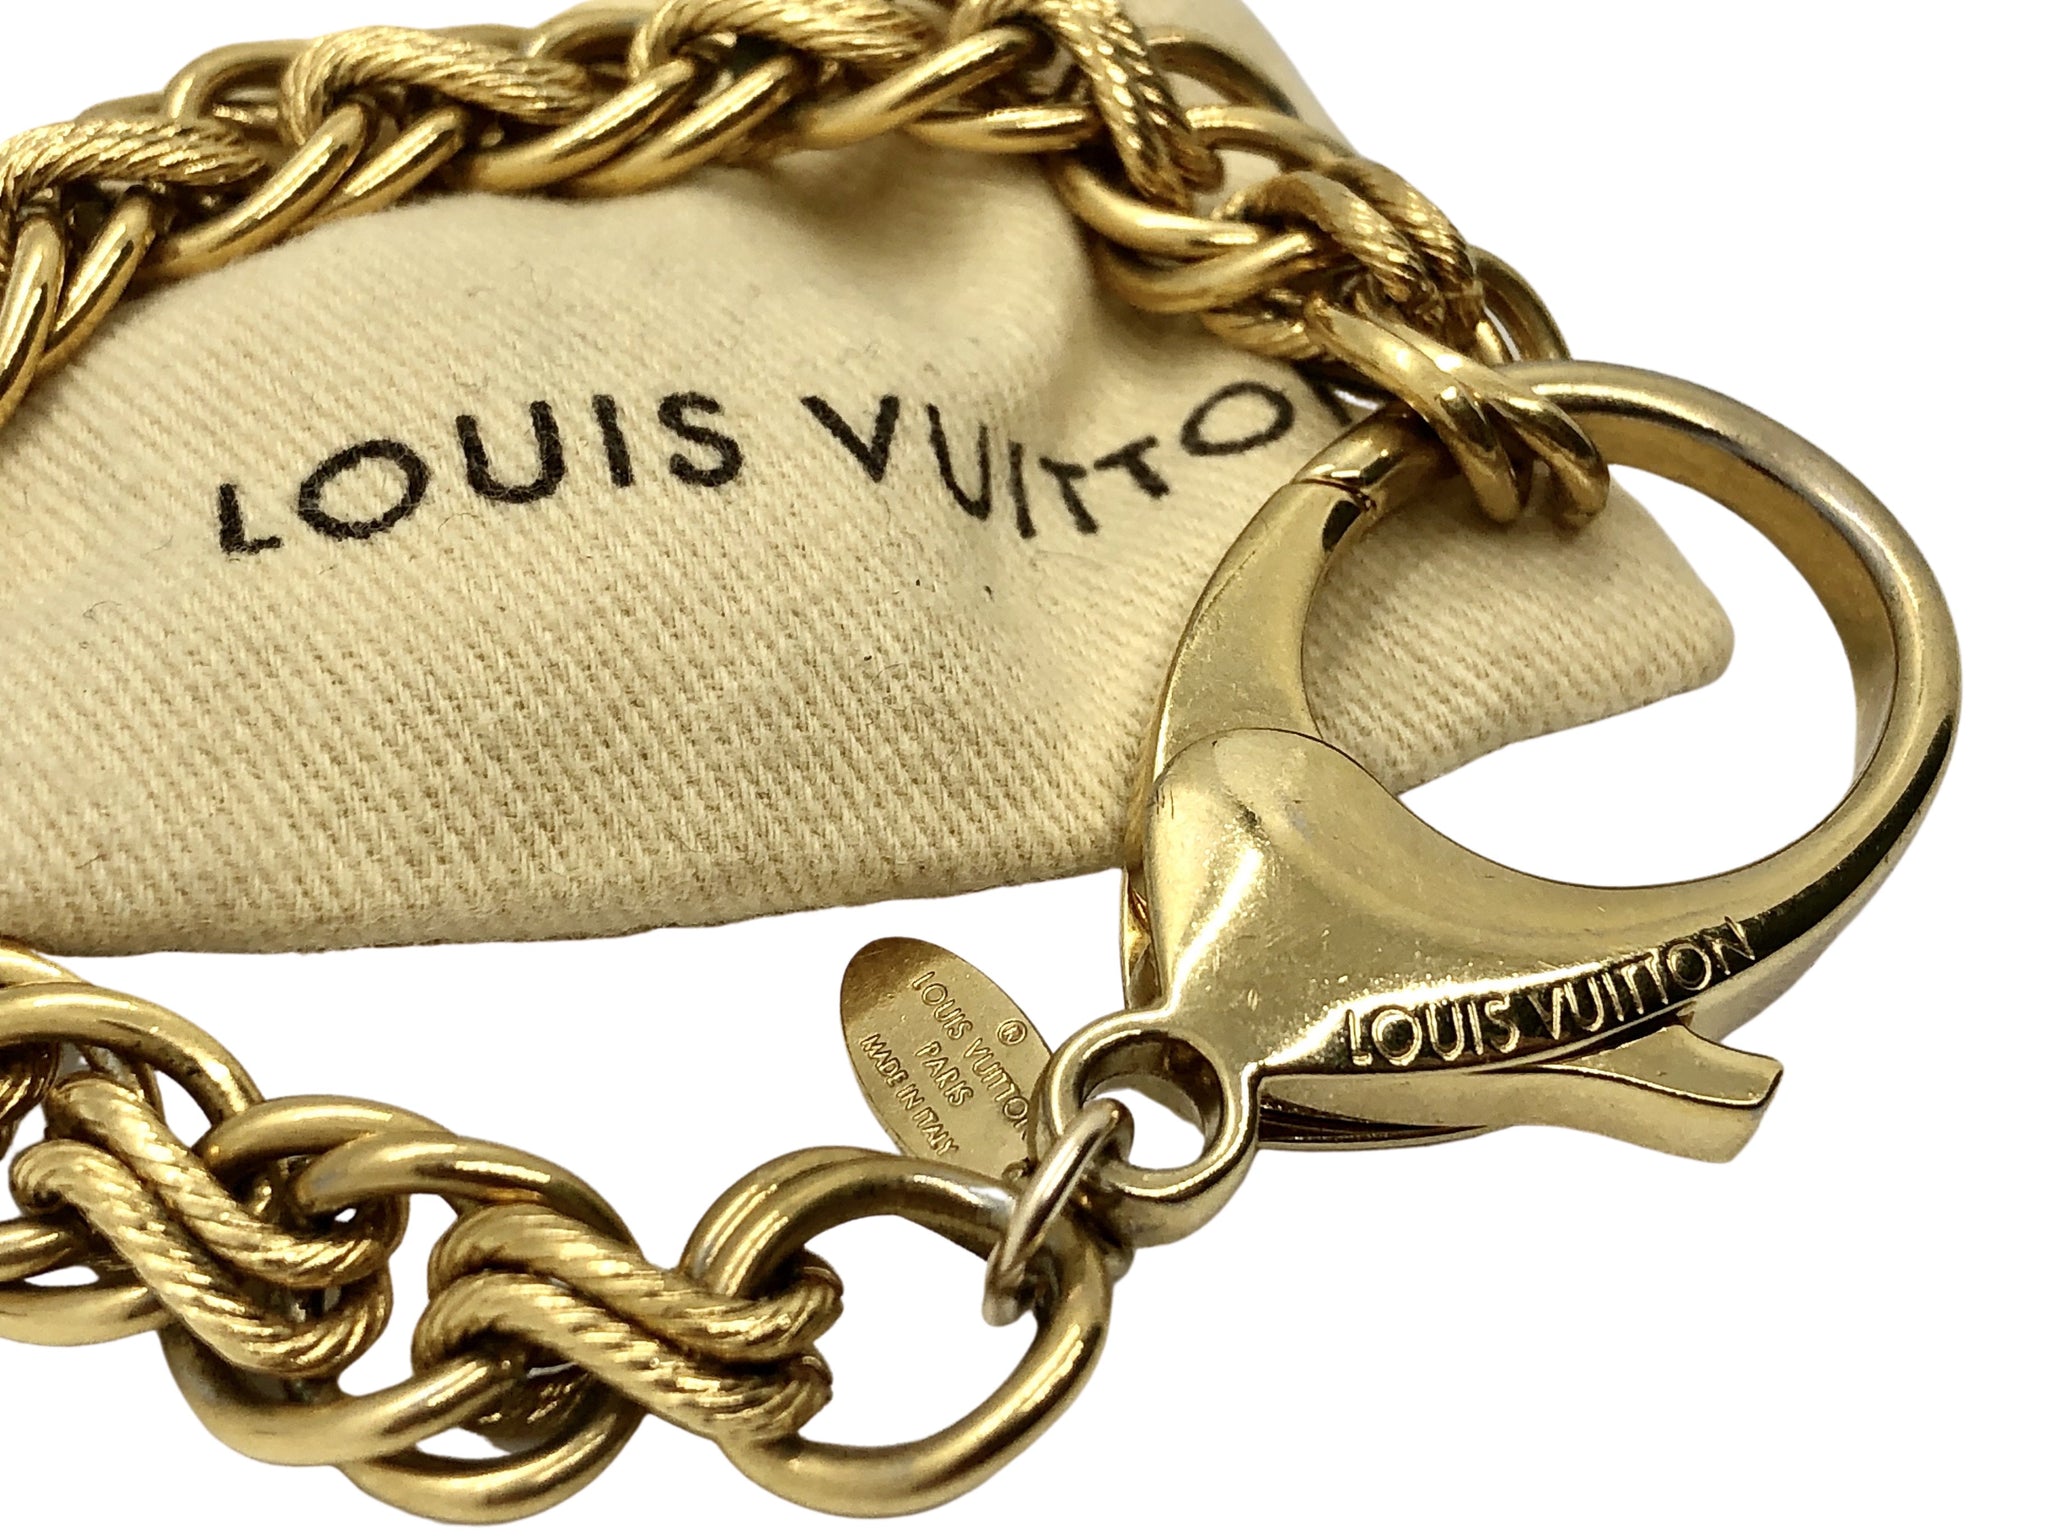 Louis Vuitton bloom bracelet gold plated 24k gold